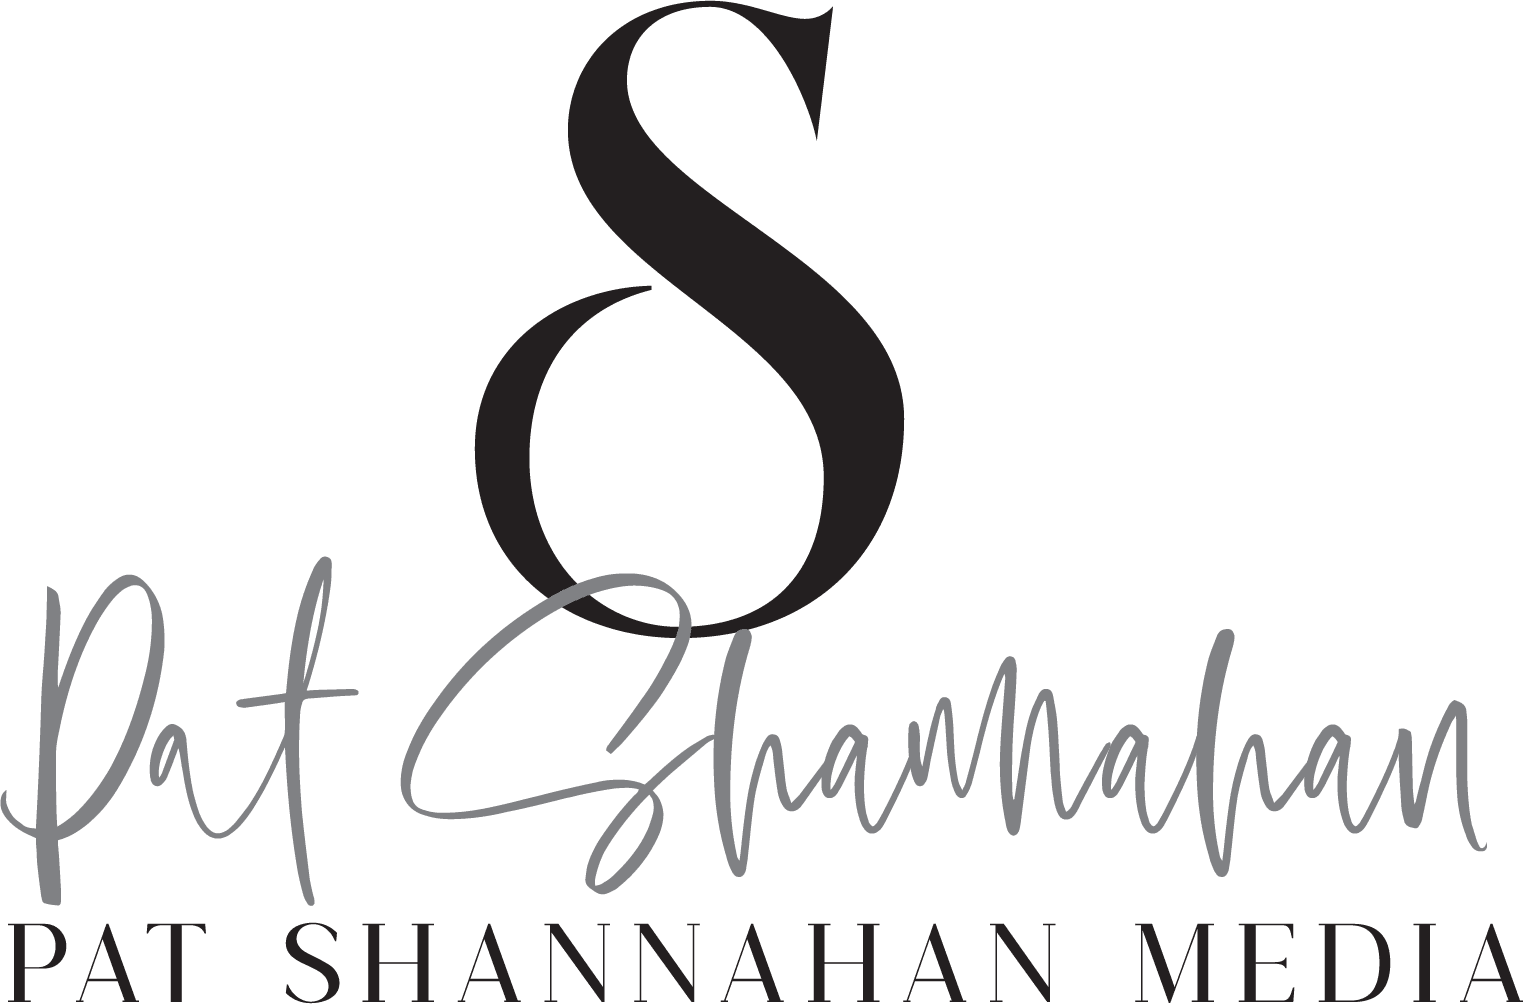 Pat Shannahan Media